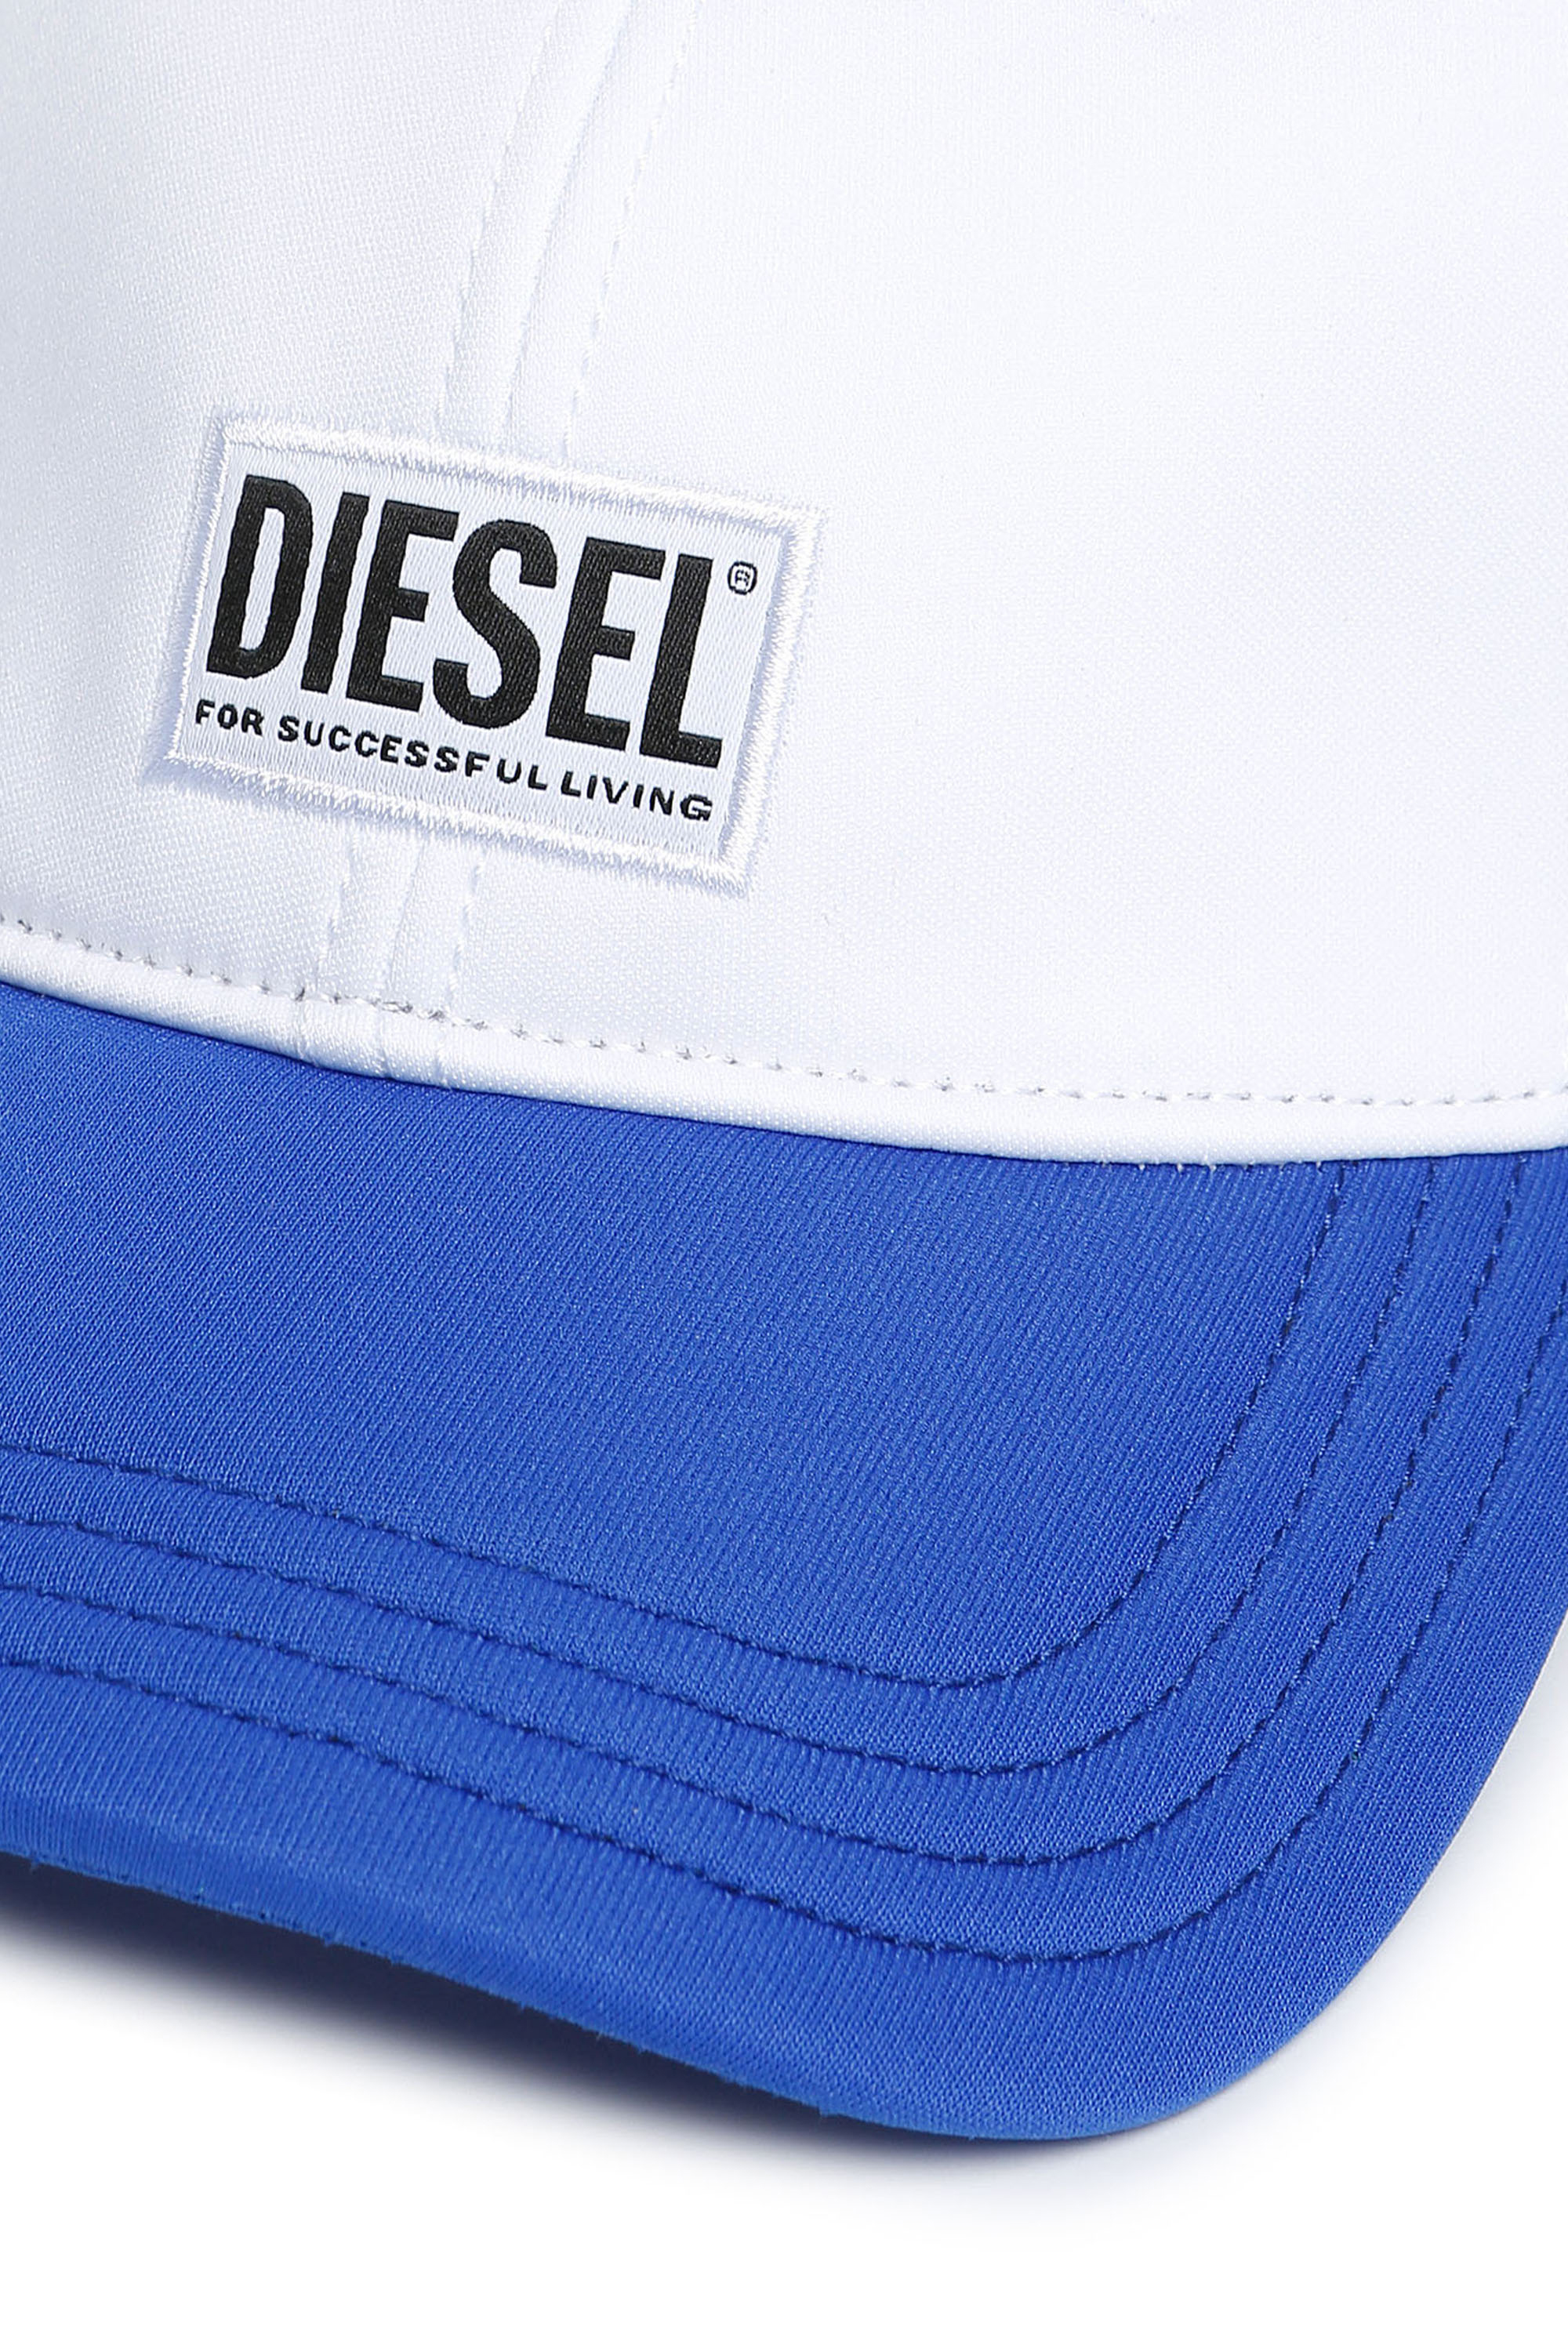 Diesel - FDURBO, Bianco/Blu - Image 3